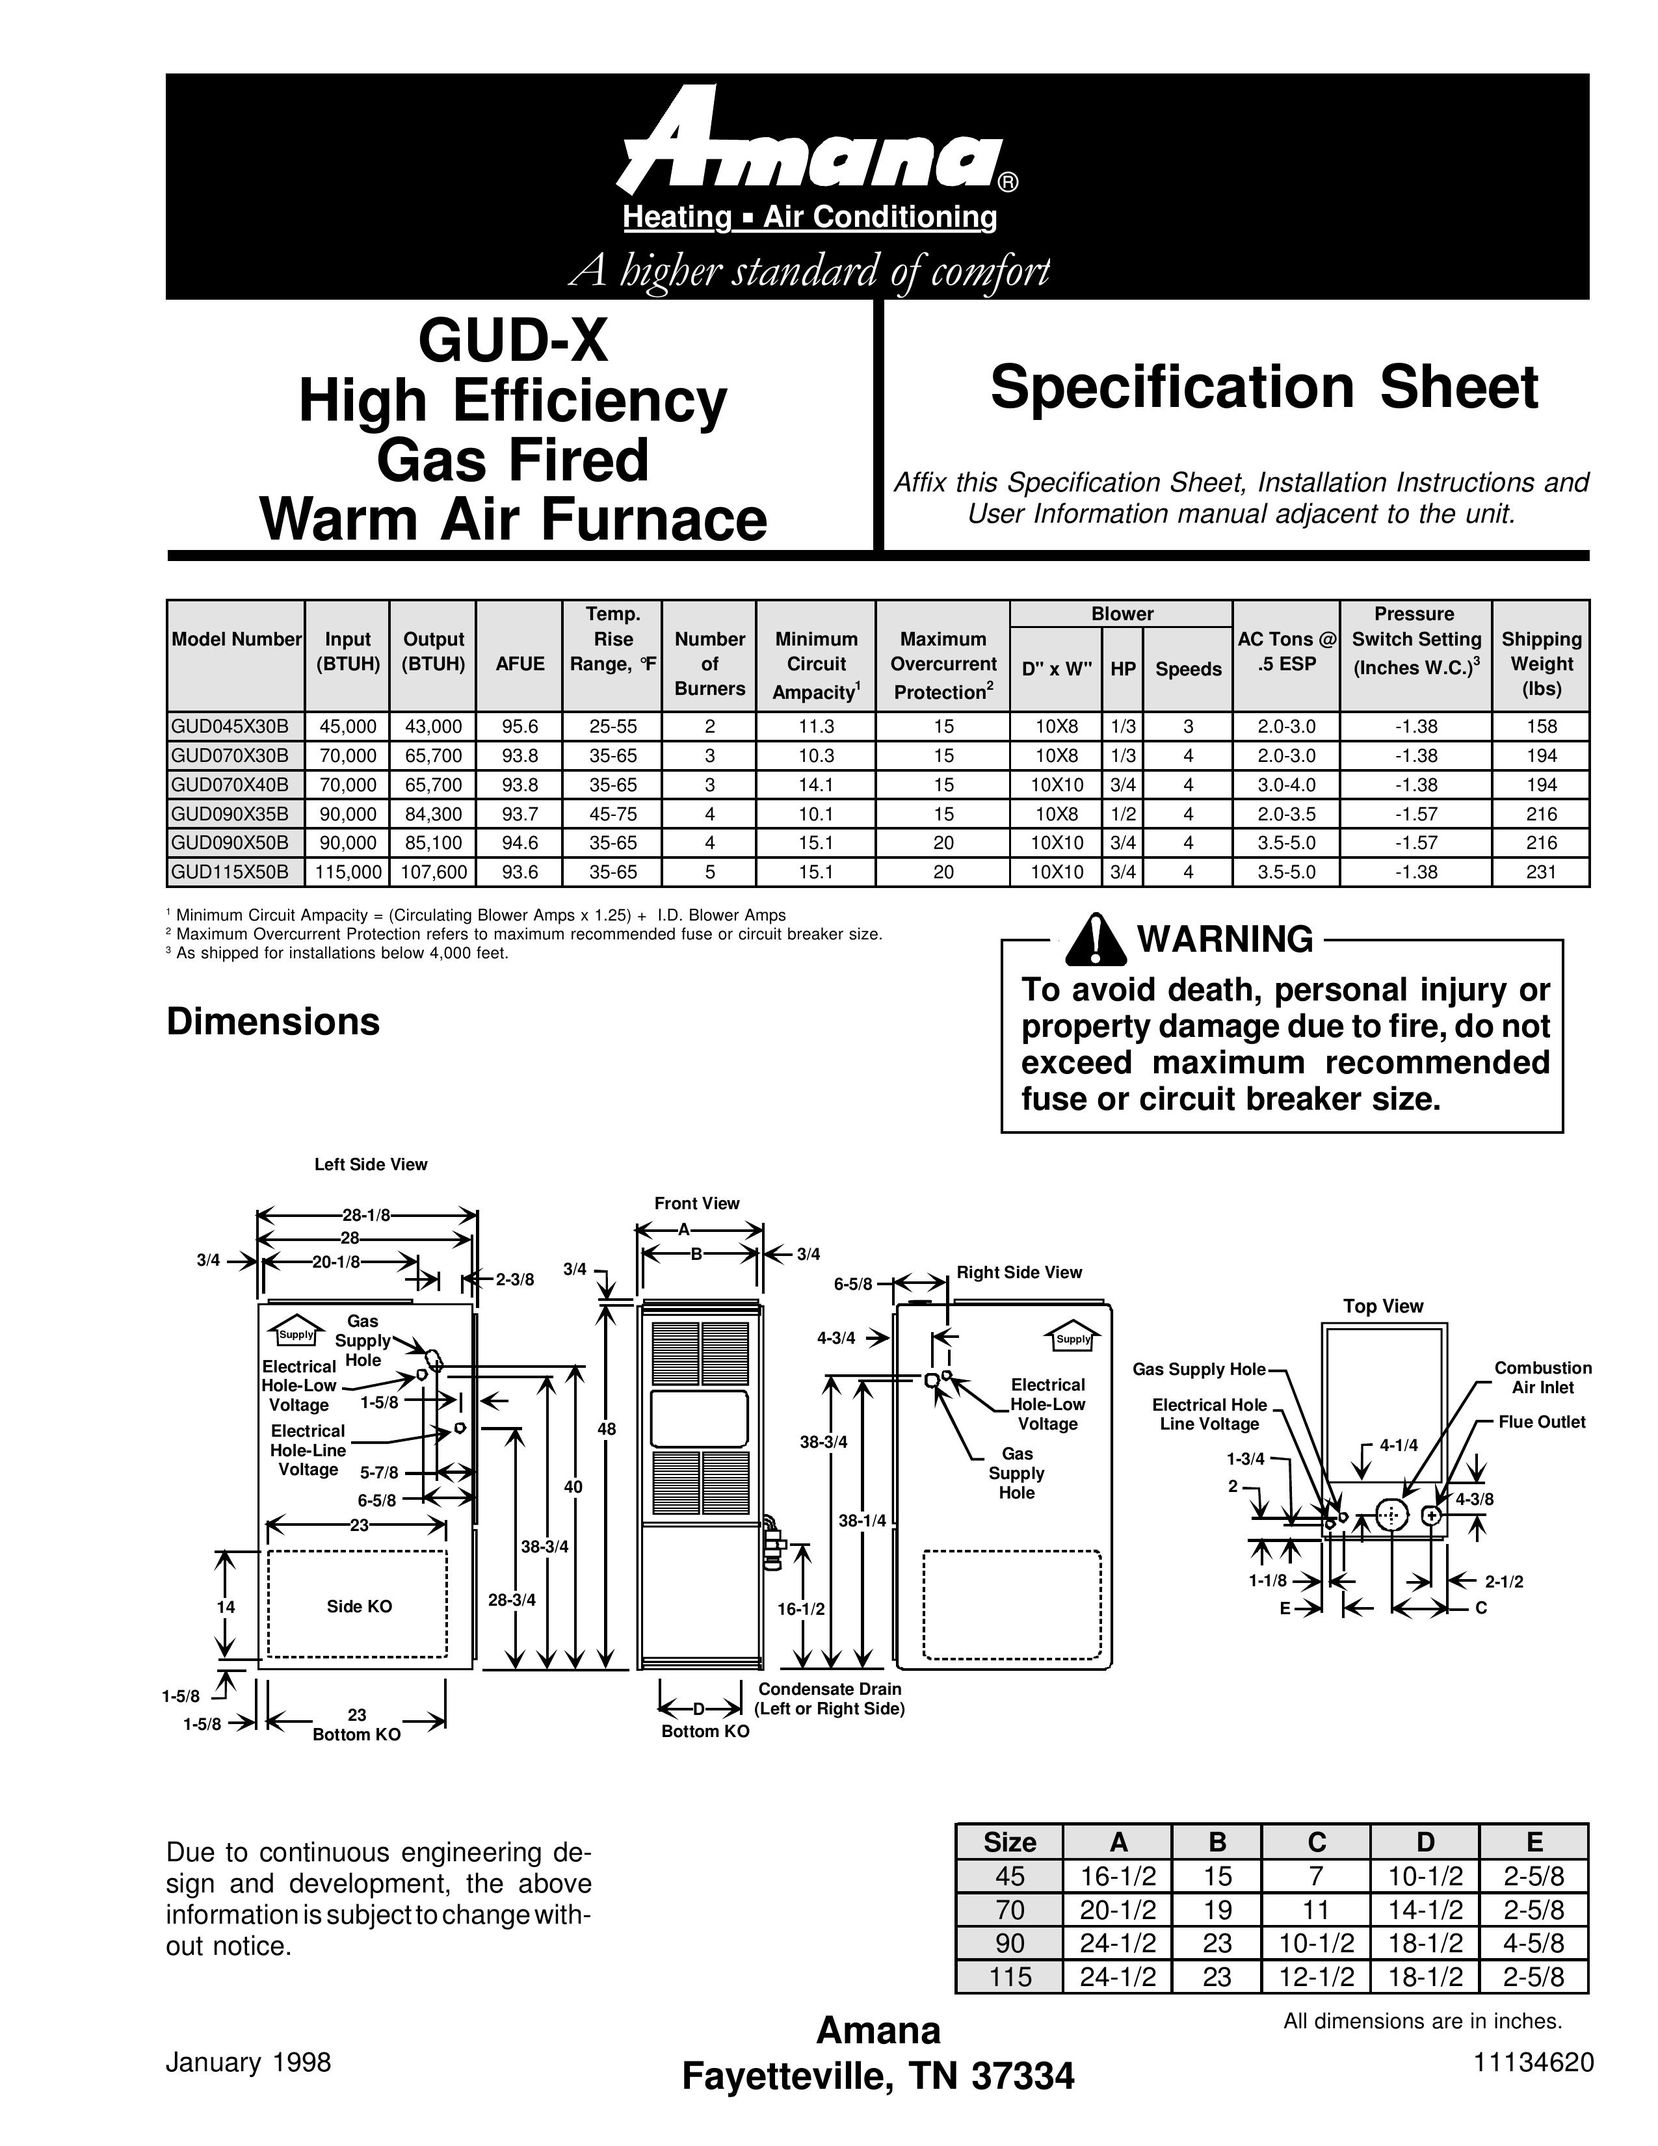 Amana GUD-X Furnace User Manual